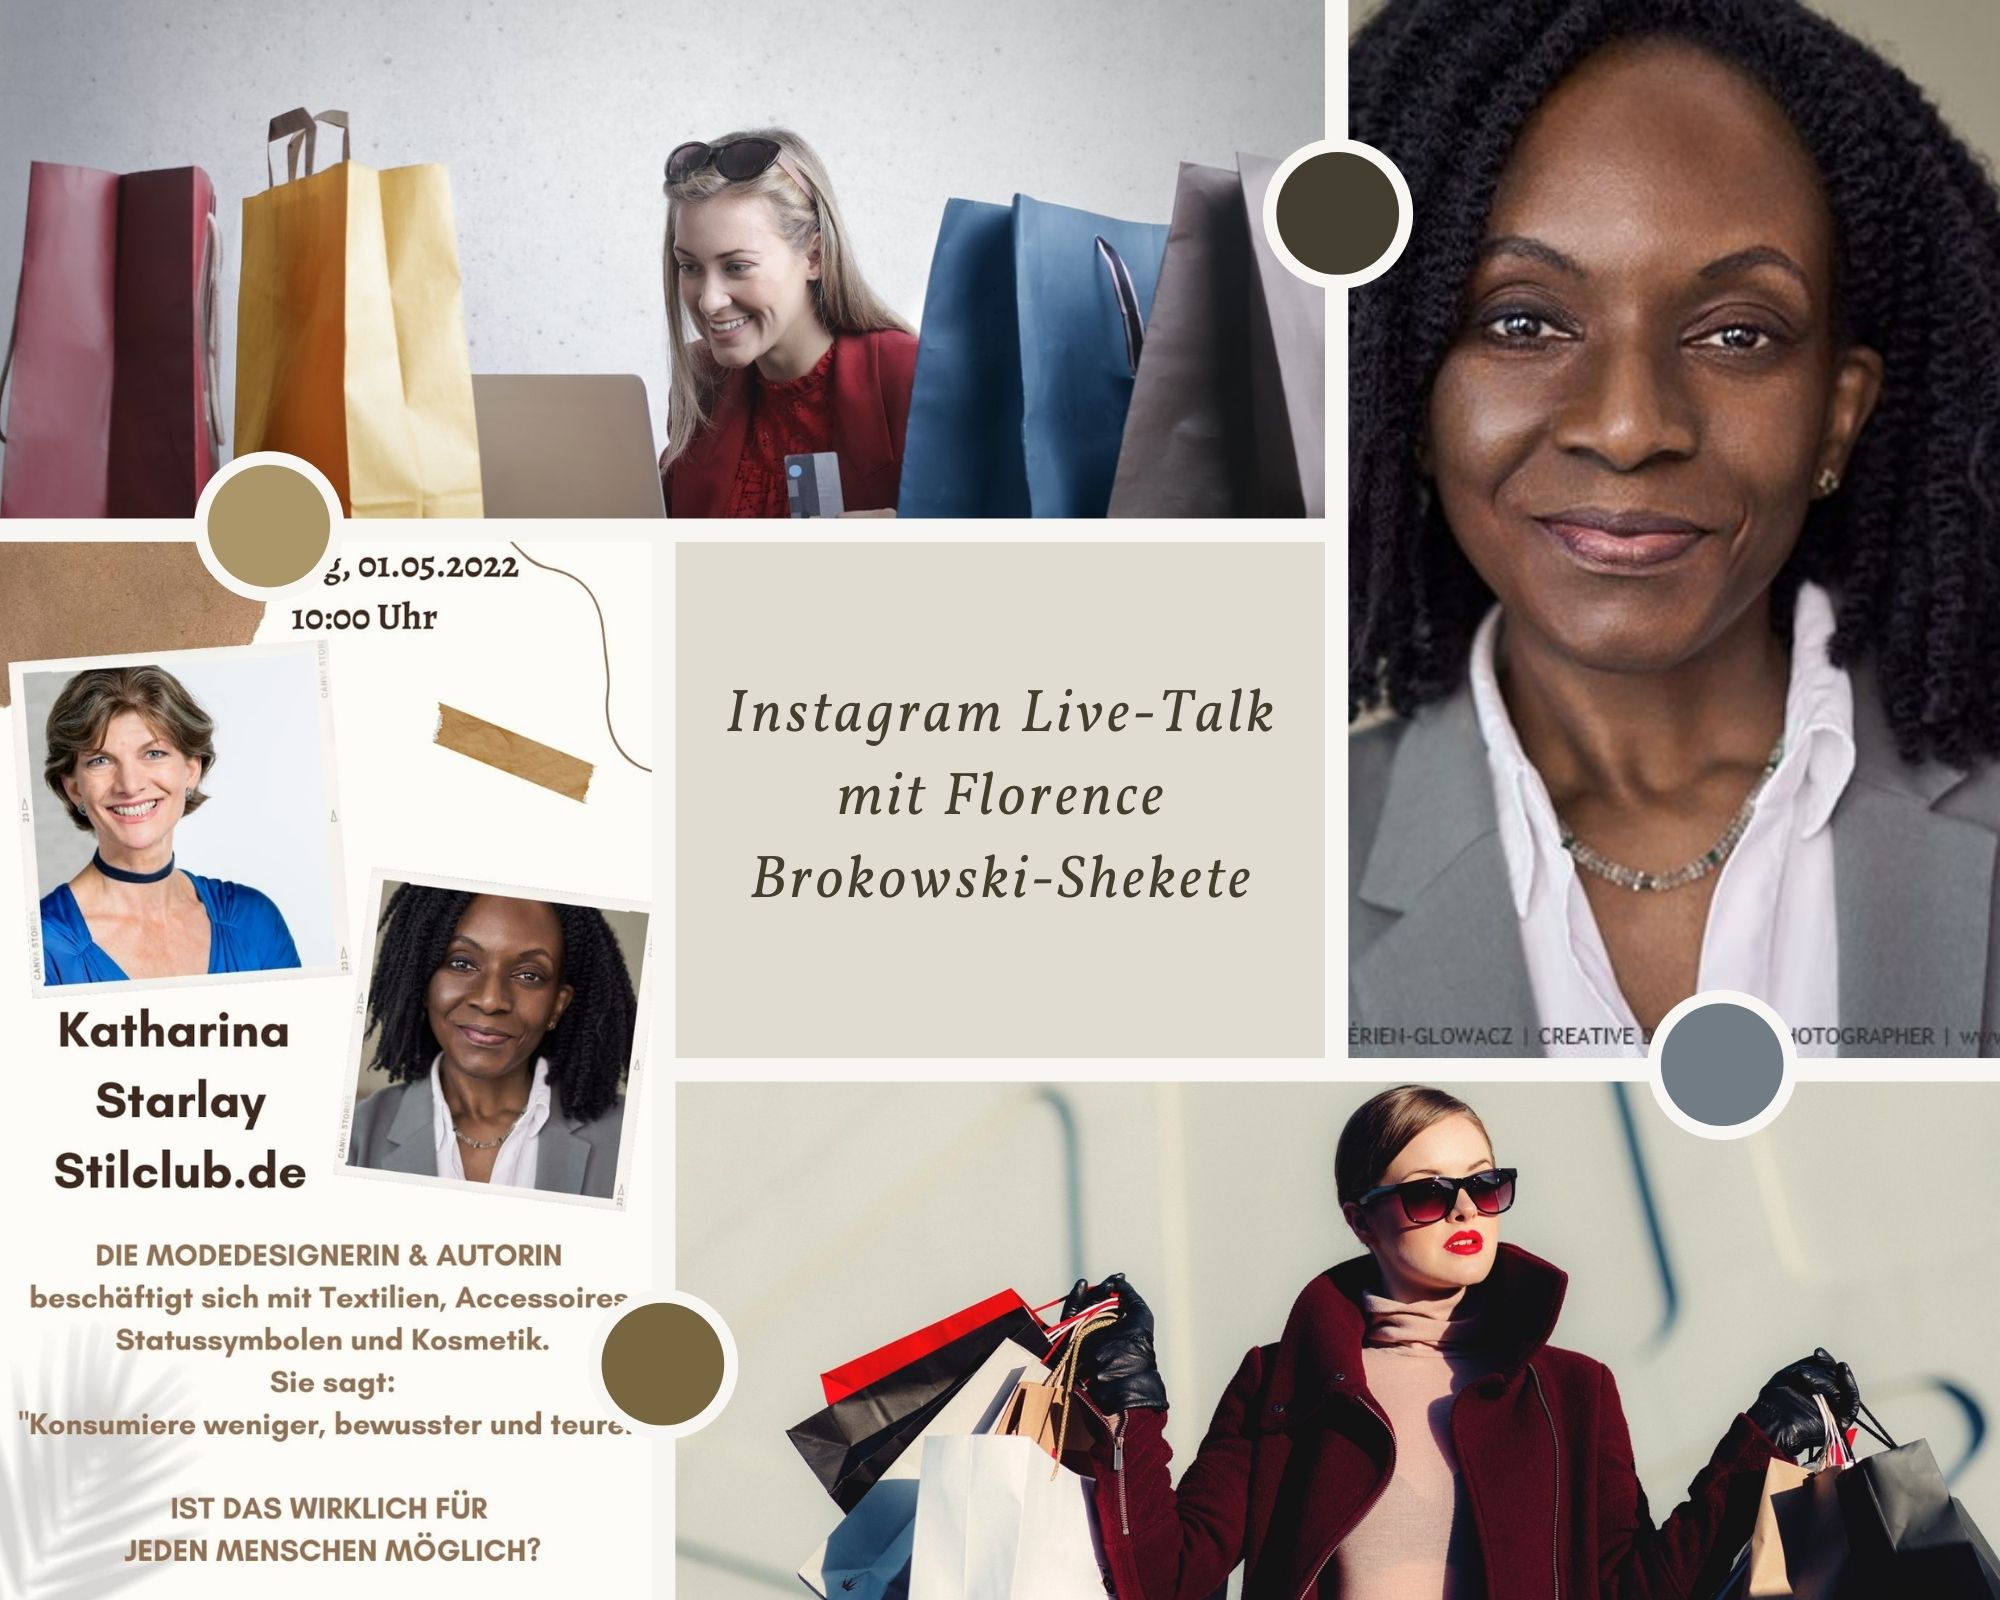 Instagram Live-Talk: Florence Brokowski-Shekete und Katharina Starlay